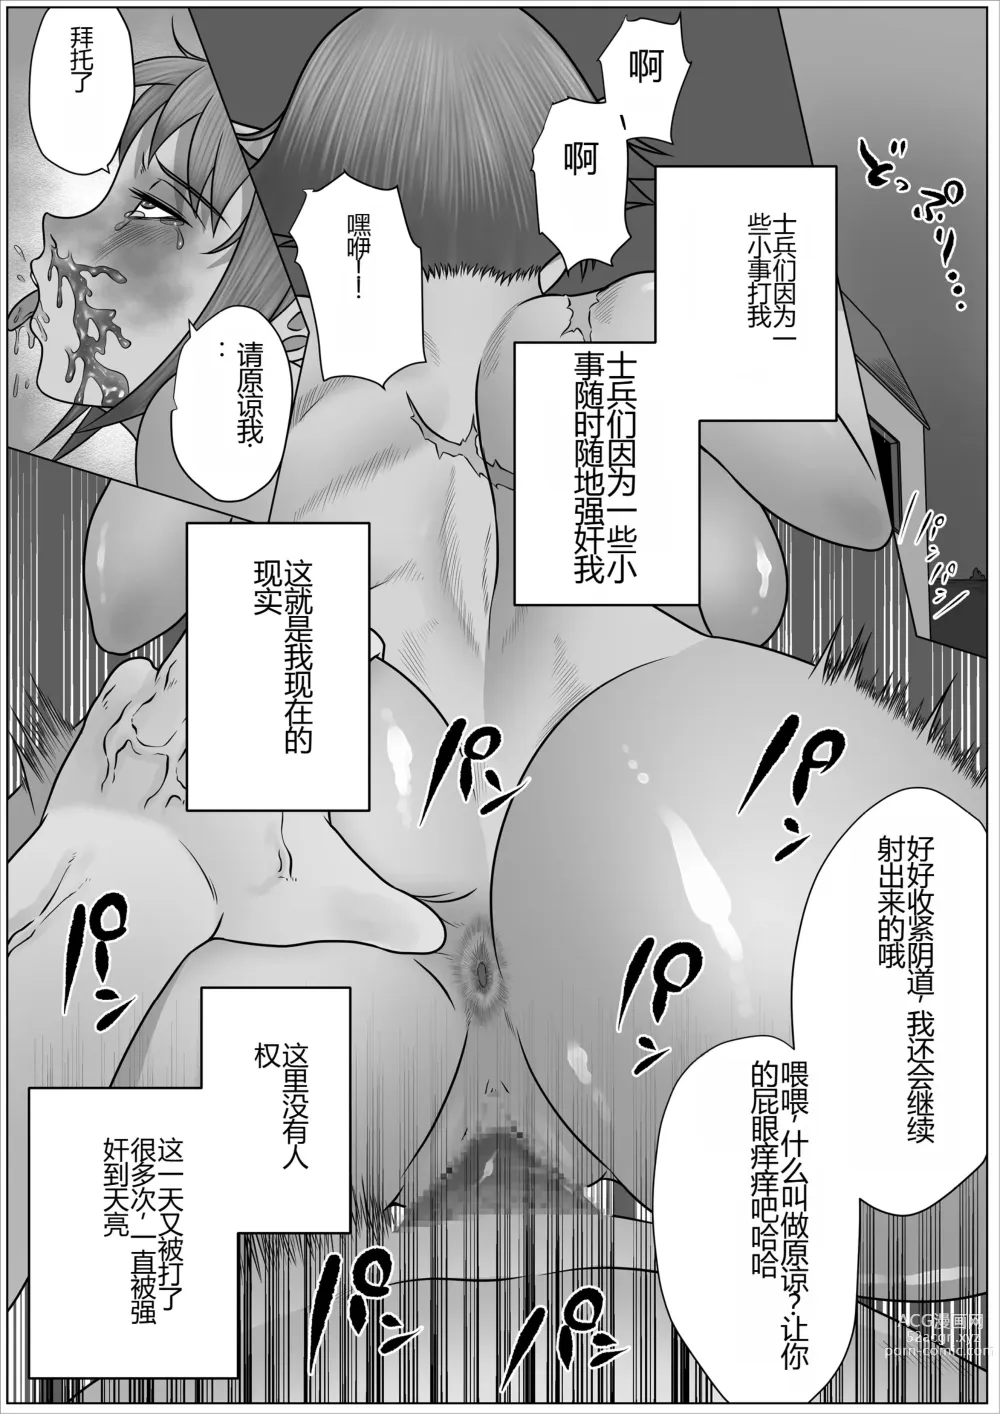 Page 12 of doujinshi 被誉为英雄的女战士长艾尔拉被改造成淫乱的母猪成为一生奉献做为配种精液便器的故事